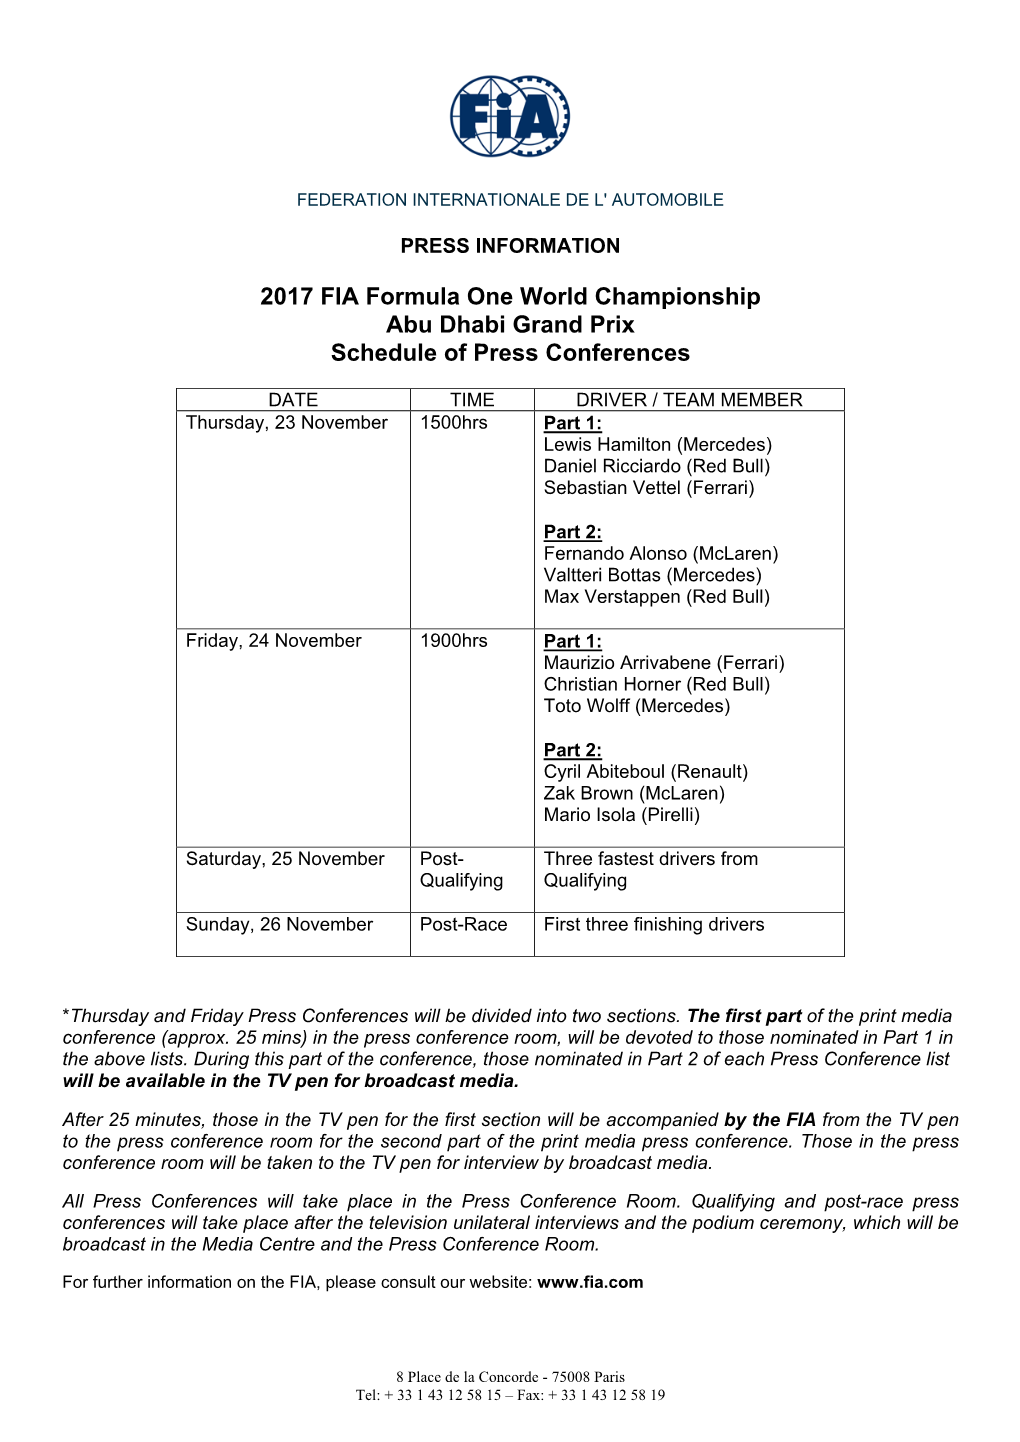 2017 FIA Formula One World Championship Abu Dhabi Grand Prix Schedule of Press Conferences